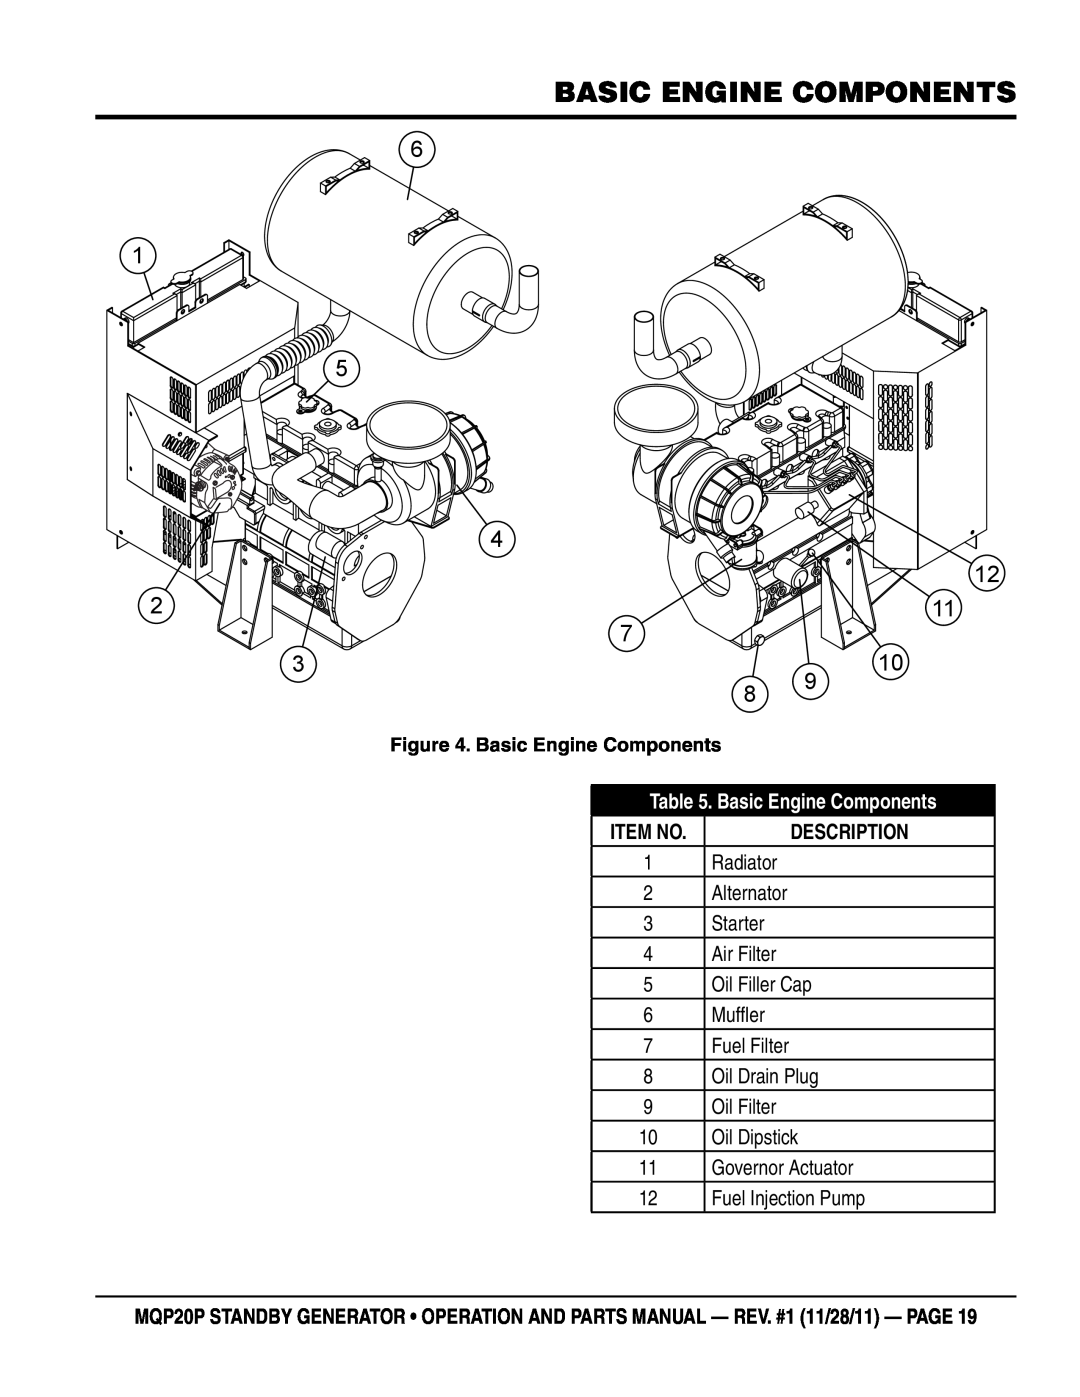 Multiquip MQP20P manual basic engine components, Basic Engine Components, Description 